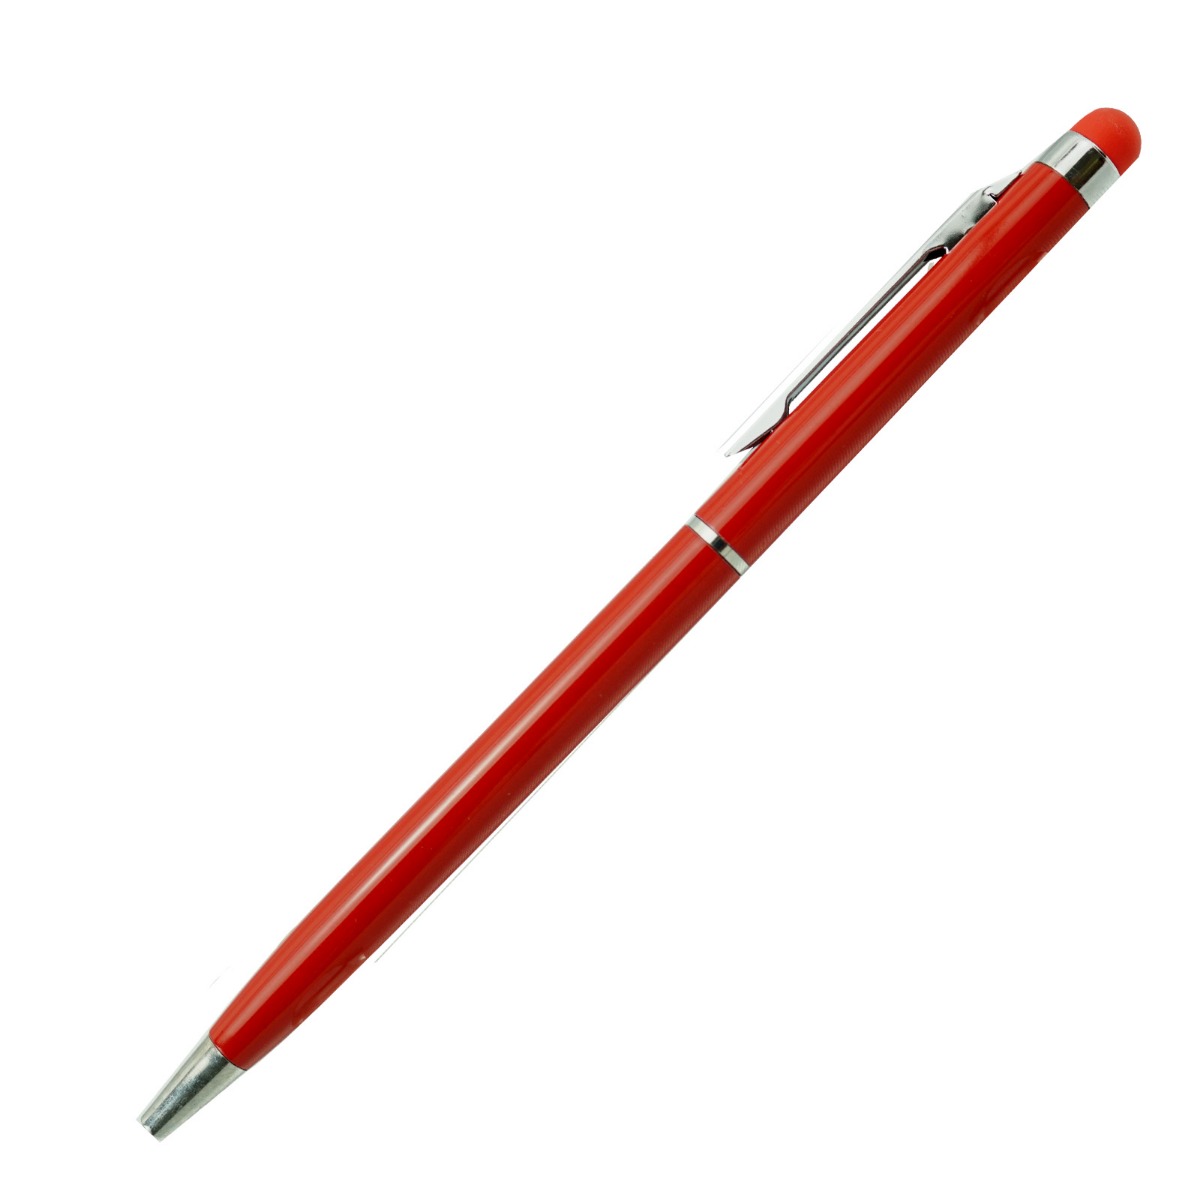 Penhouse  Stylus Ball Pen Model.No. 16861 Red Color Body